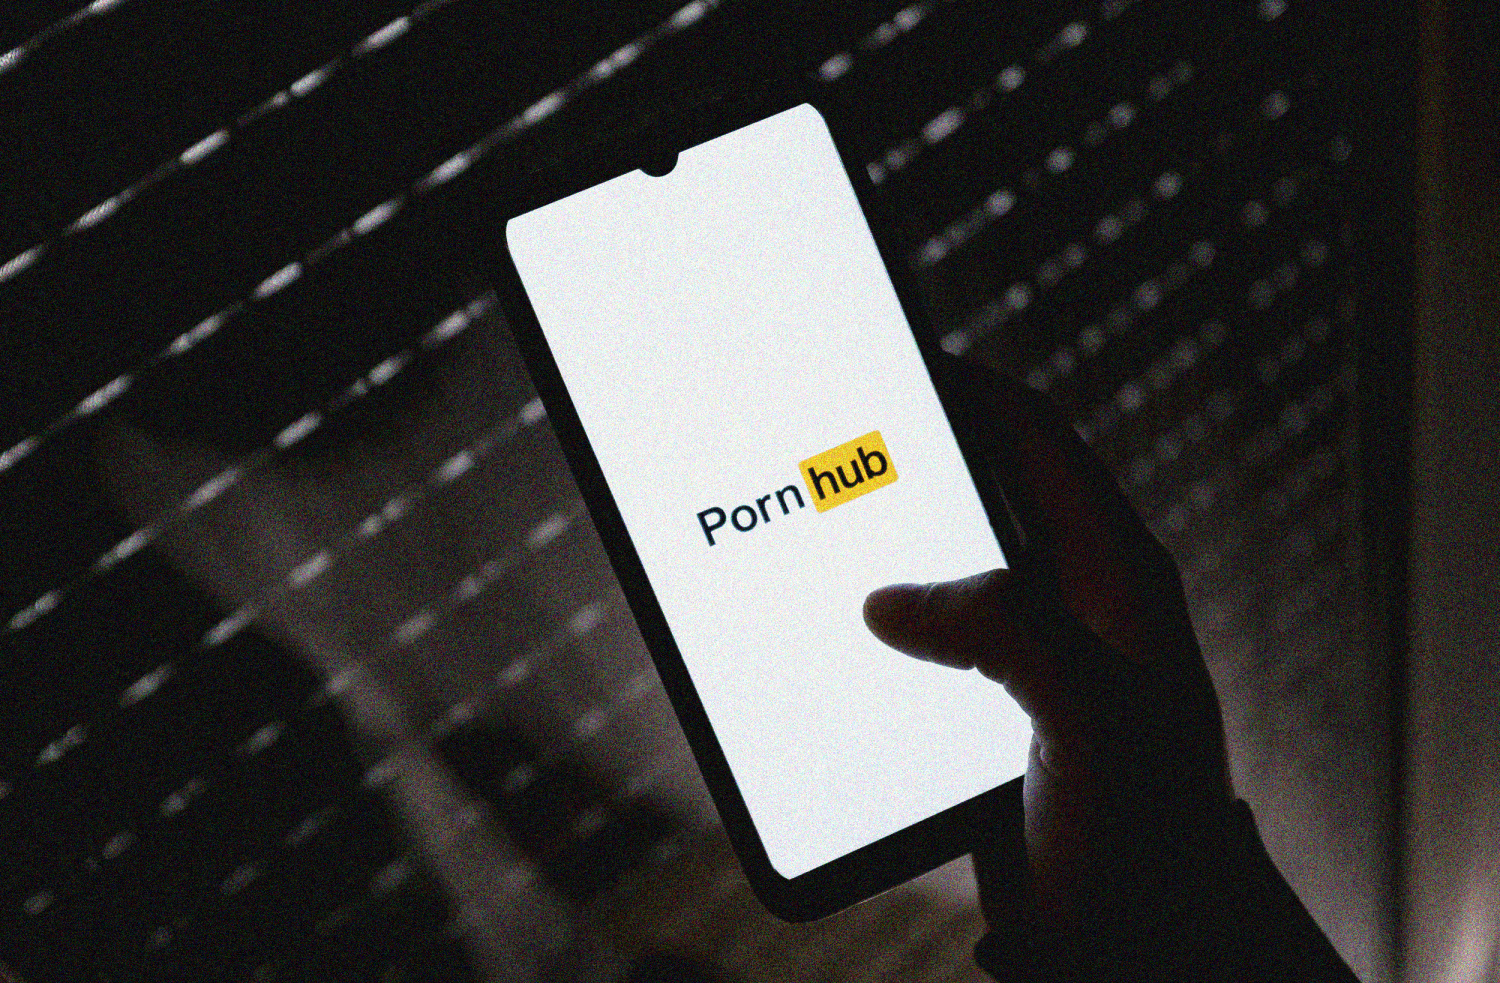 Pormhub - Meet Pornhub's new owner: Ethical Capital Partners